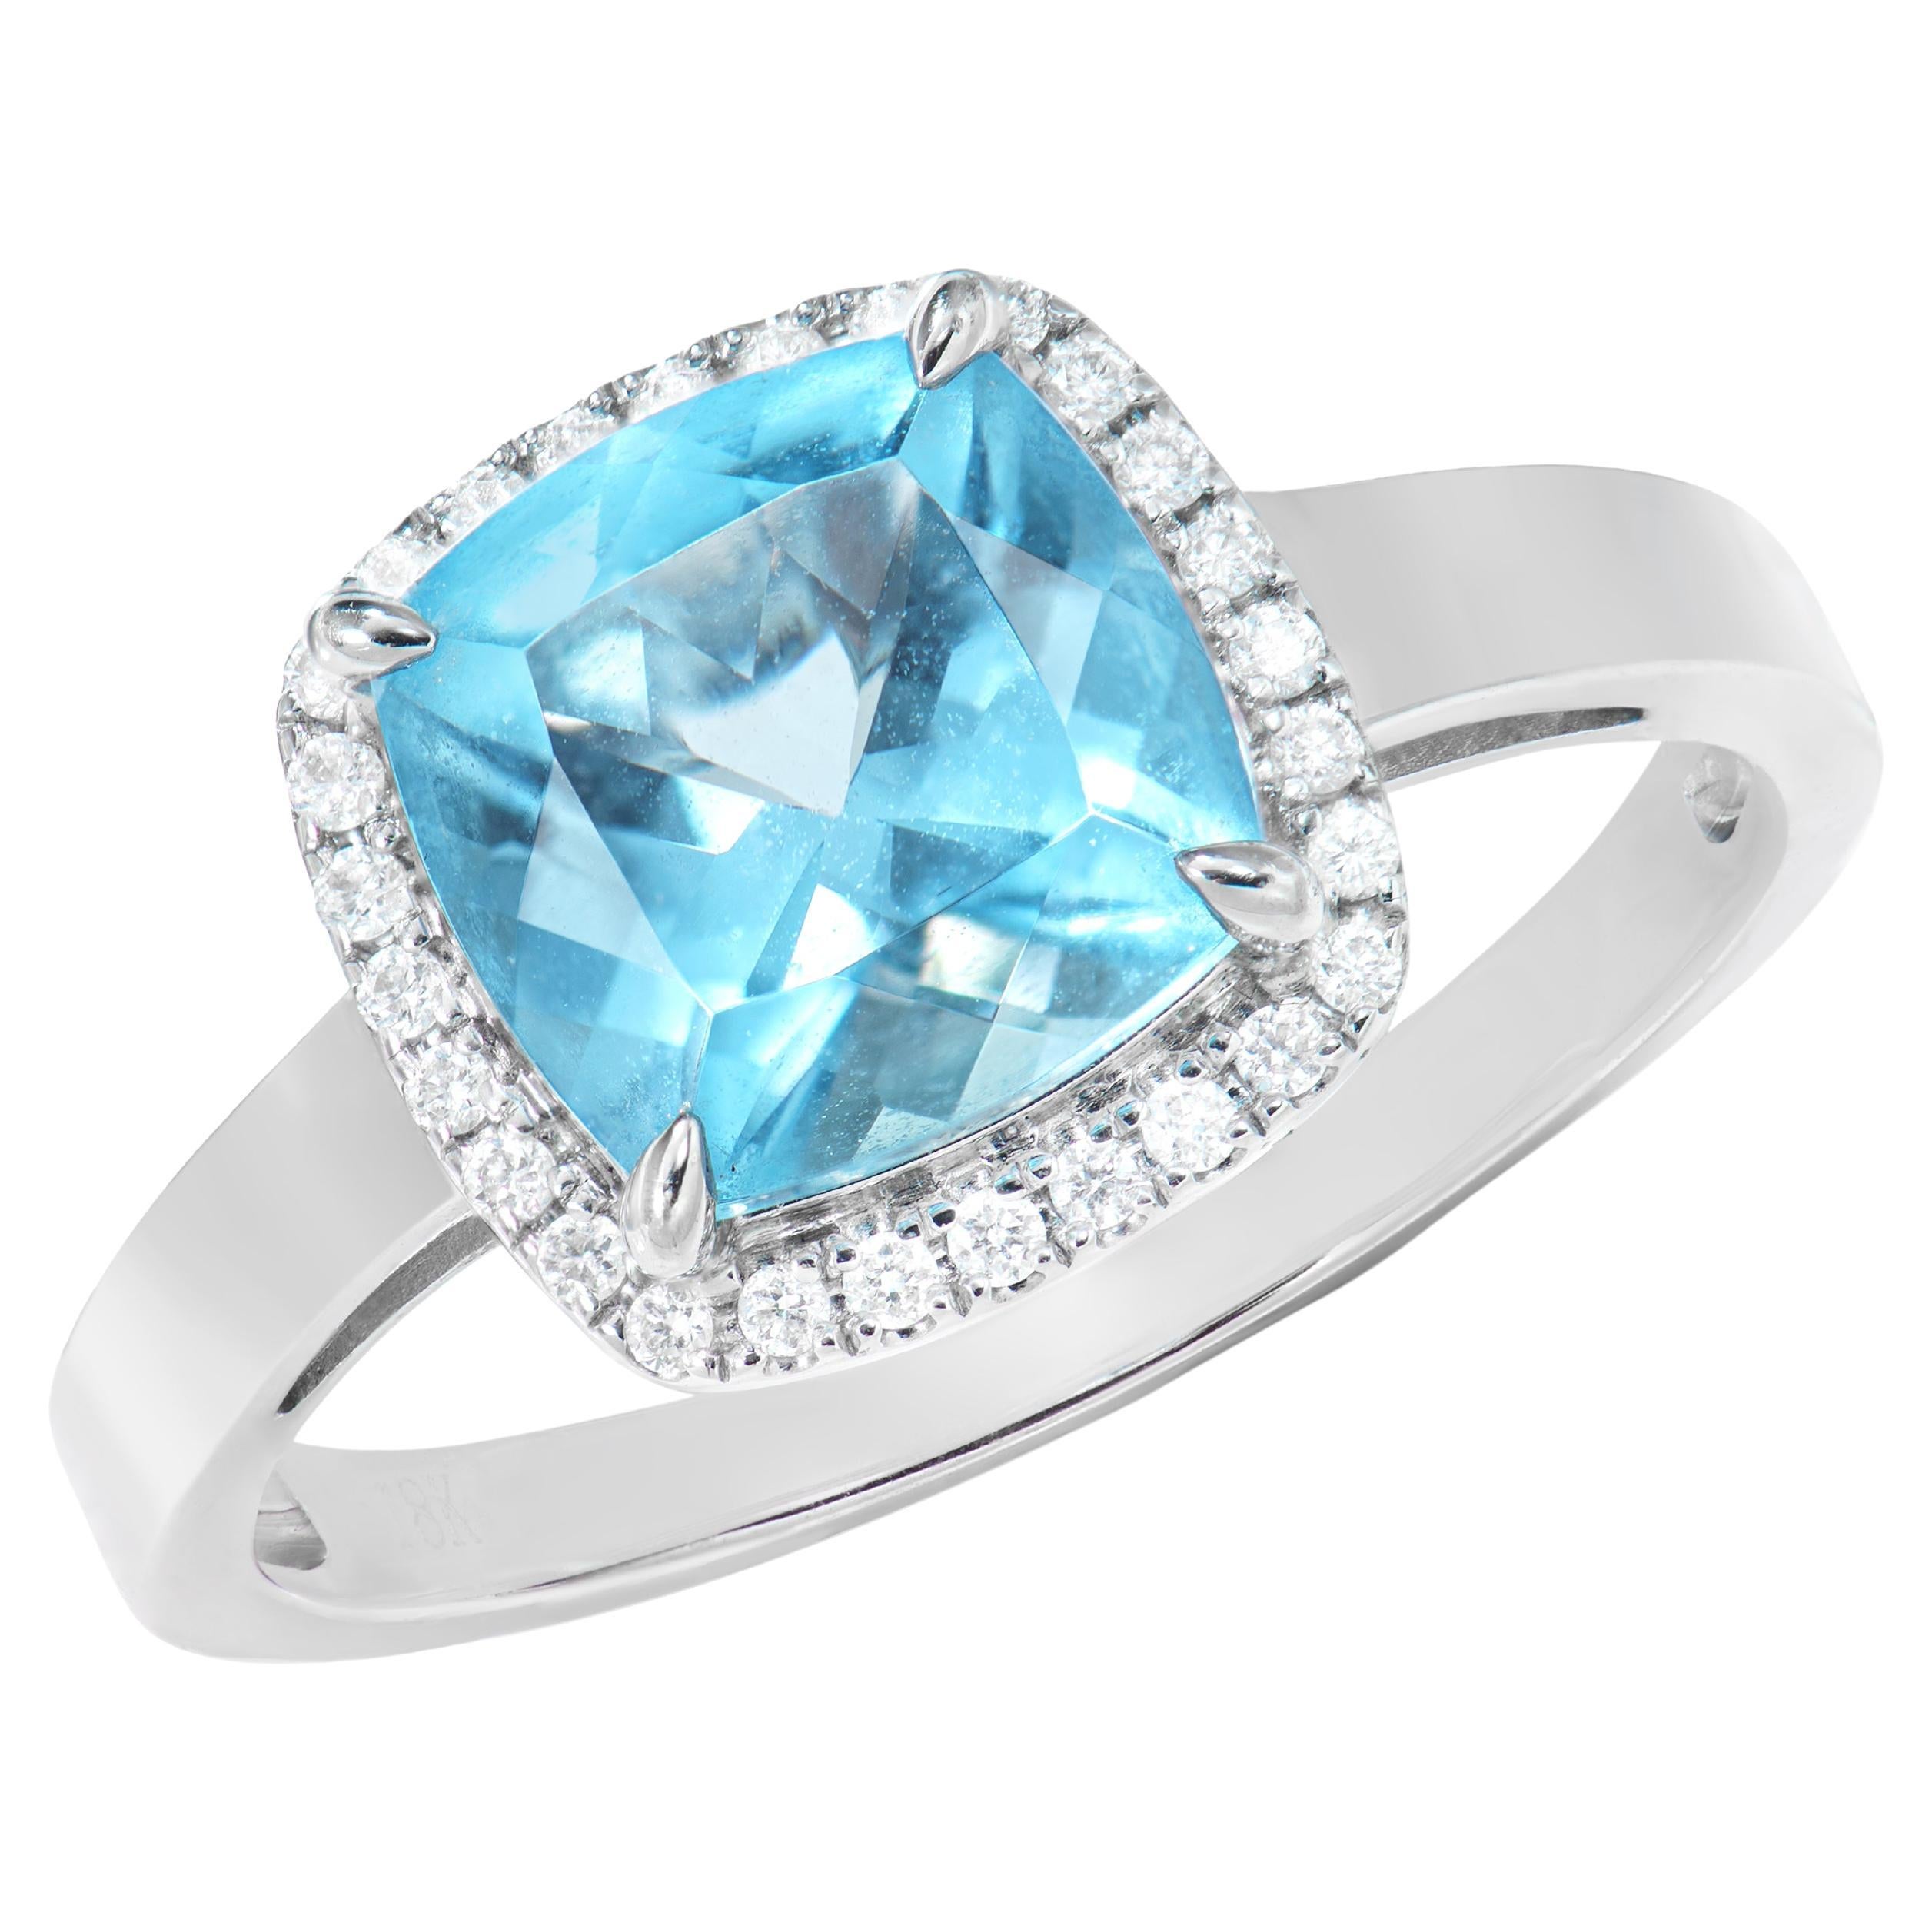 2.51 Carat Sky Blue Topaz Fancy Ring in 18Karat White Gold with White Diamond.